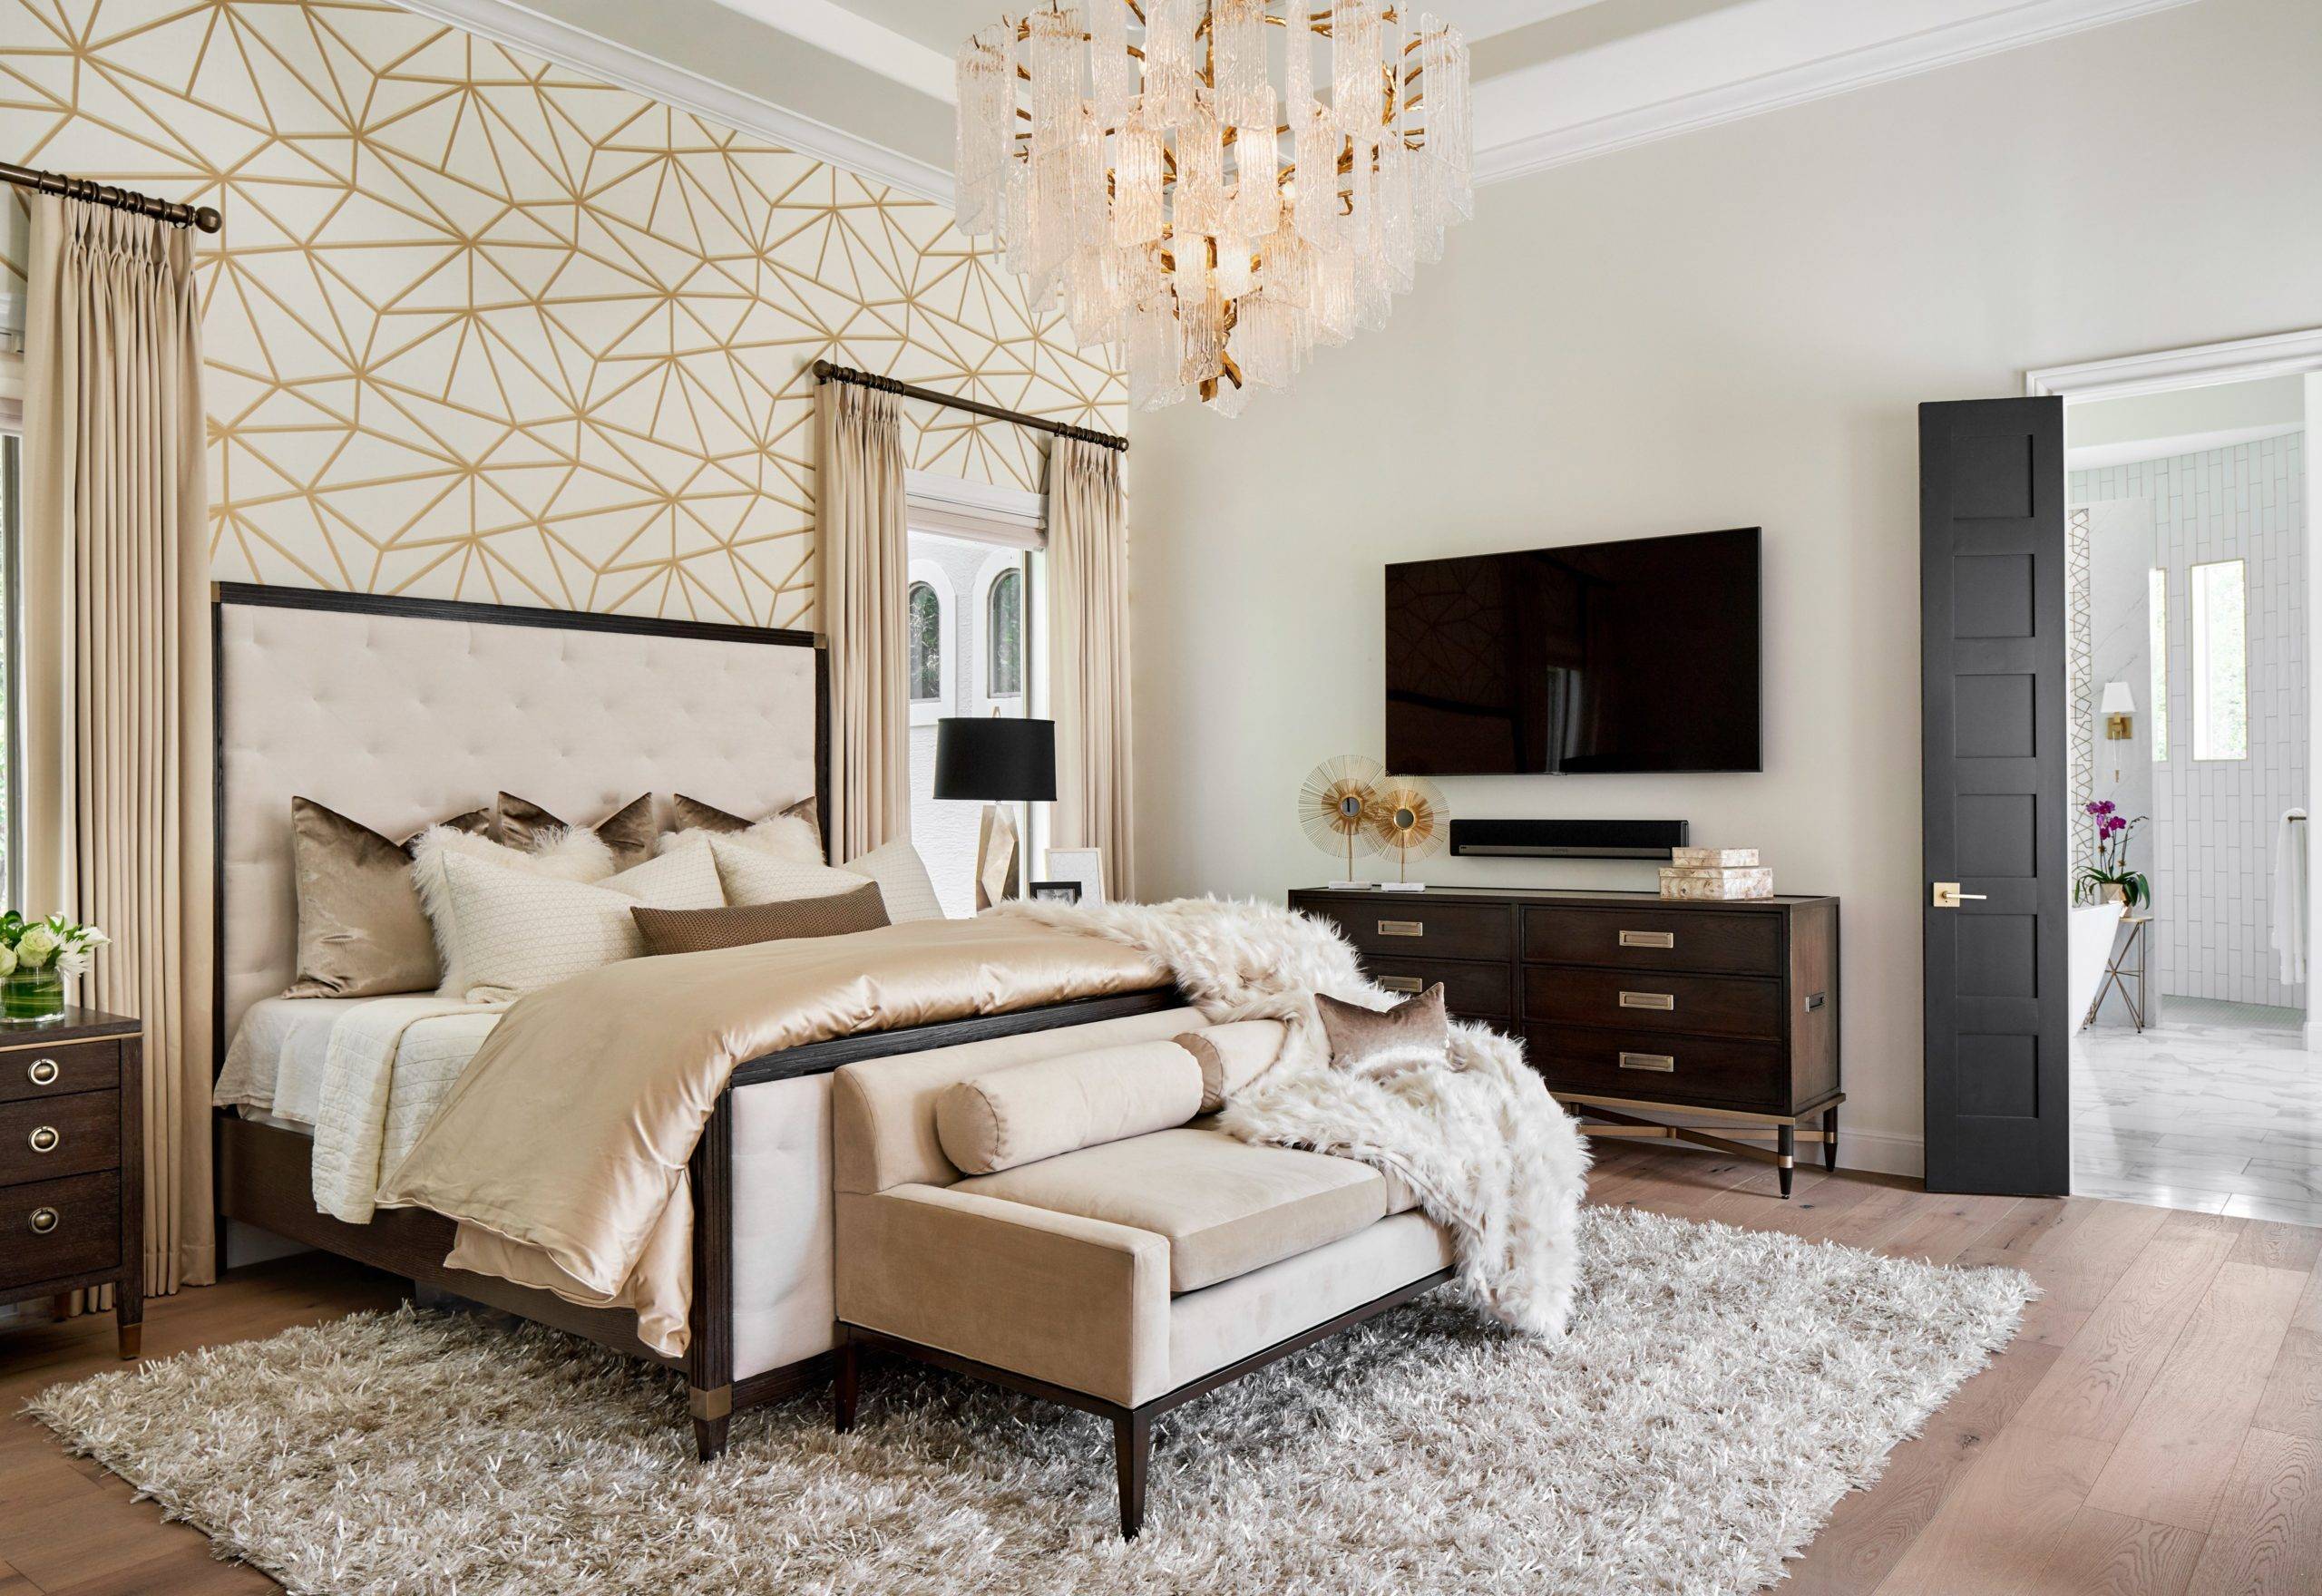 15 Bedroom wallpaper ideas for a romantic touch - COCO LAPINE DESIGNCOCO  LAPINE DESIGN